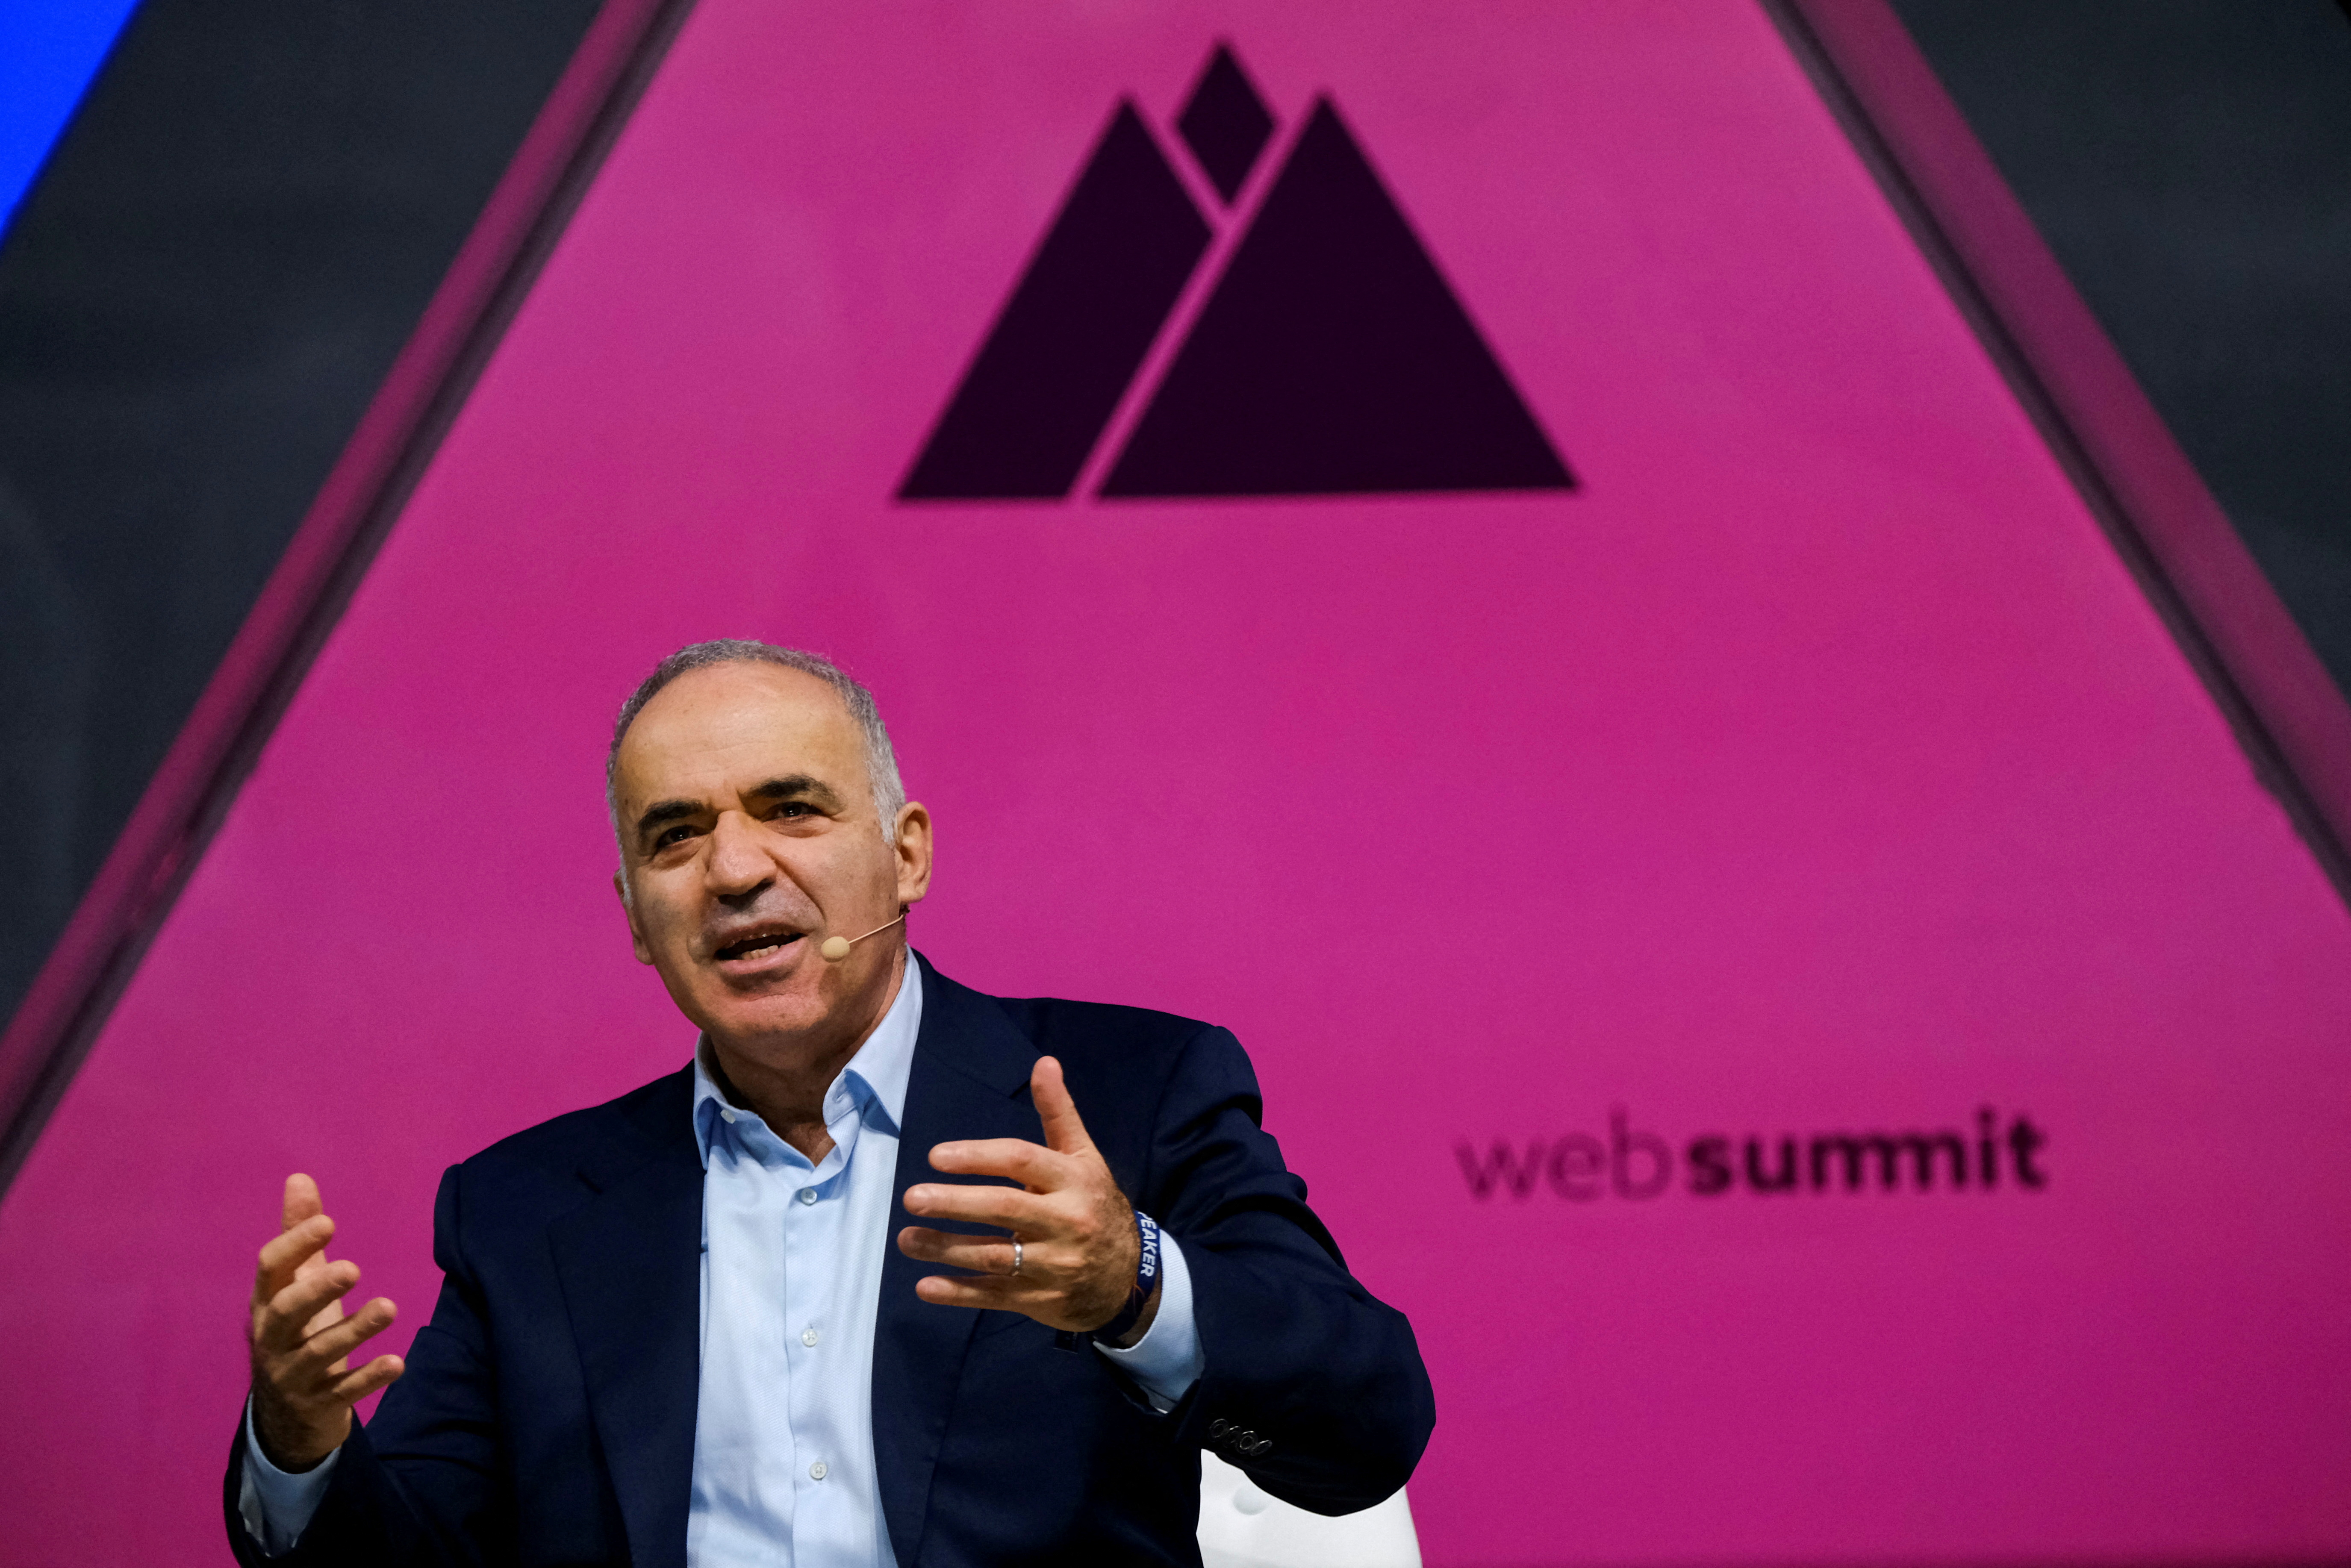 Garry Kasparov speaks during Web Summit, Europe's largest technology conference, in Lisbon